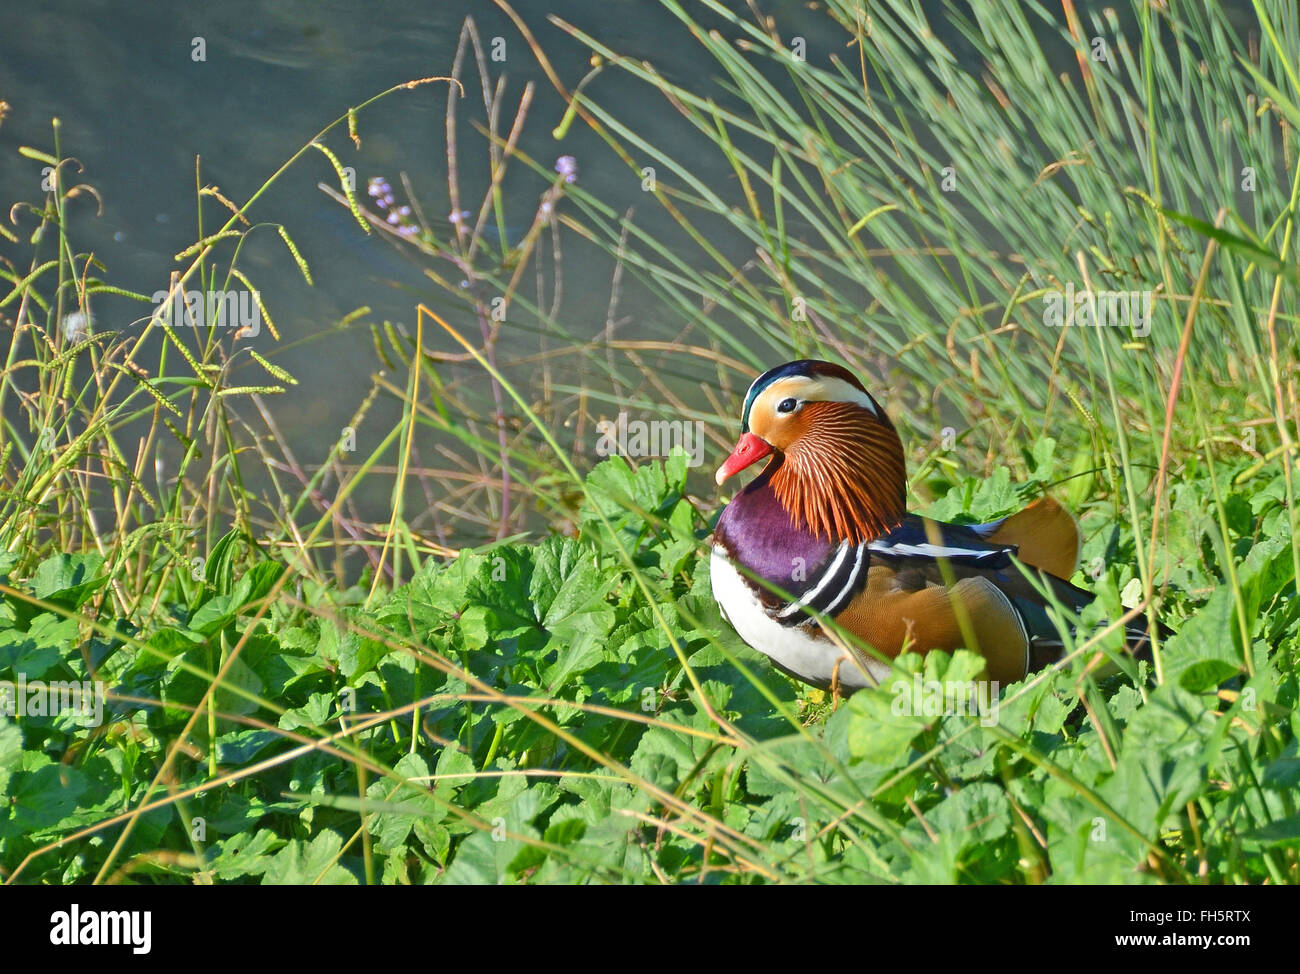 mandarin duck in the grass Stock Photo